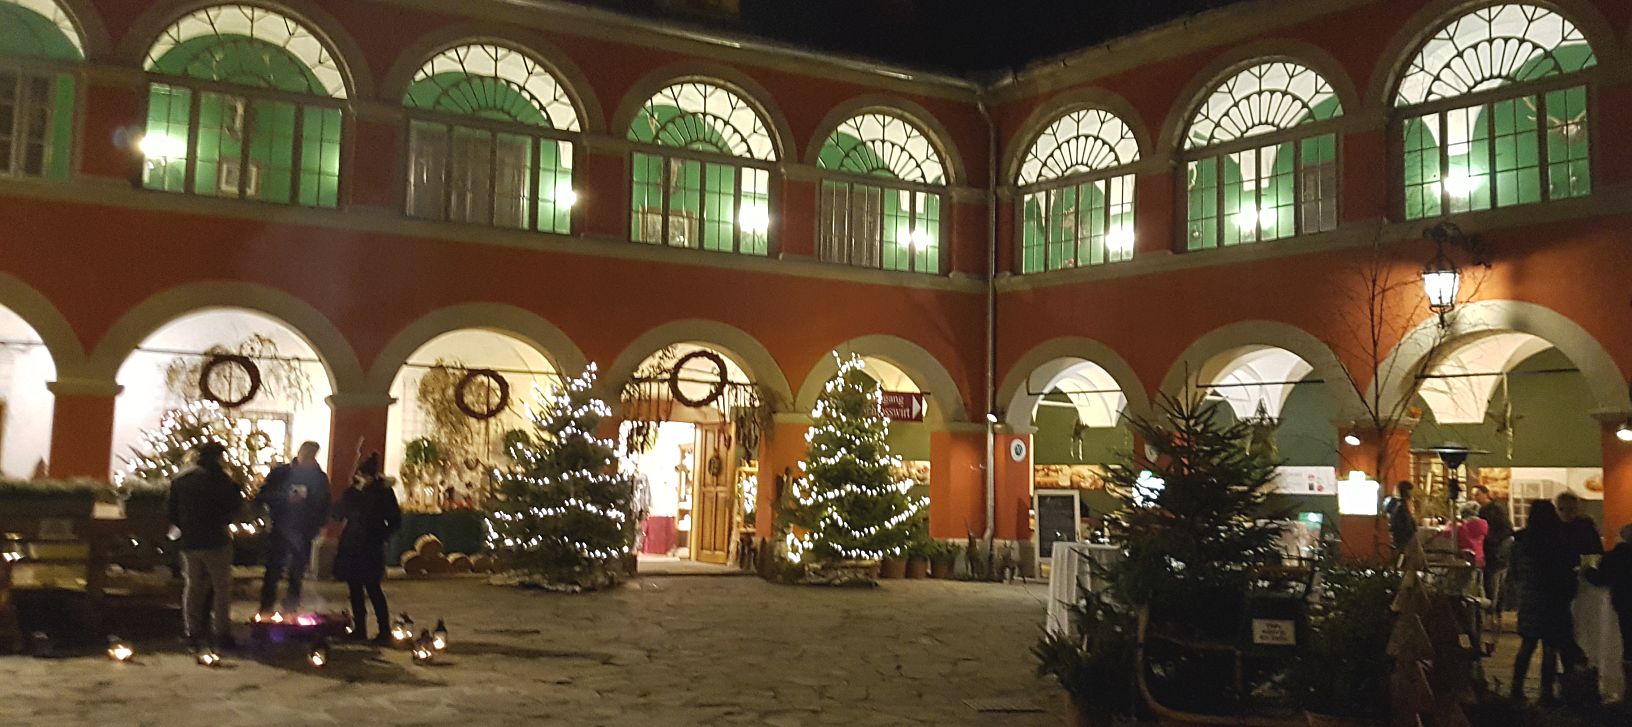 Innenhof Schloss Kornberg mit Weihnachtsbäumen für den Advent geschmückt